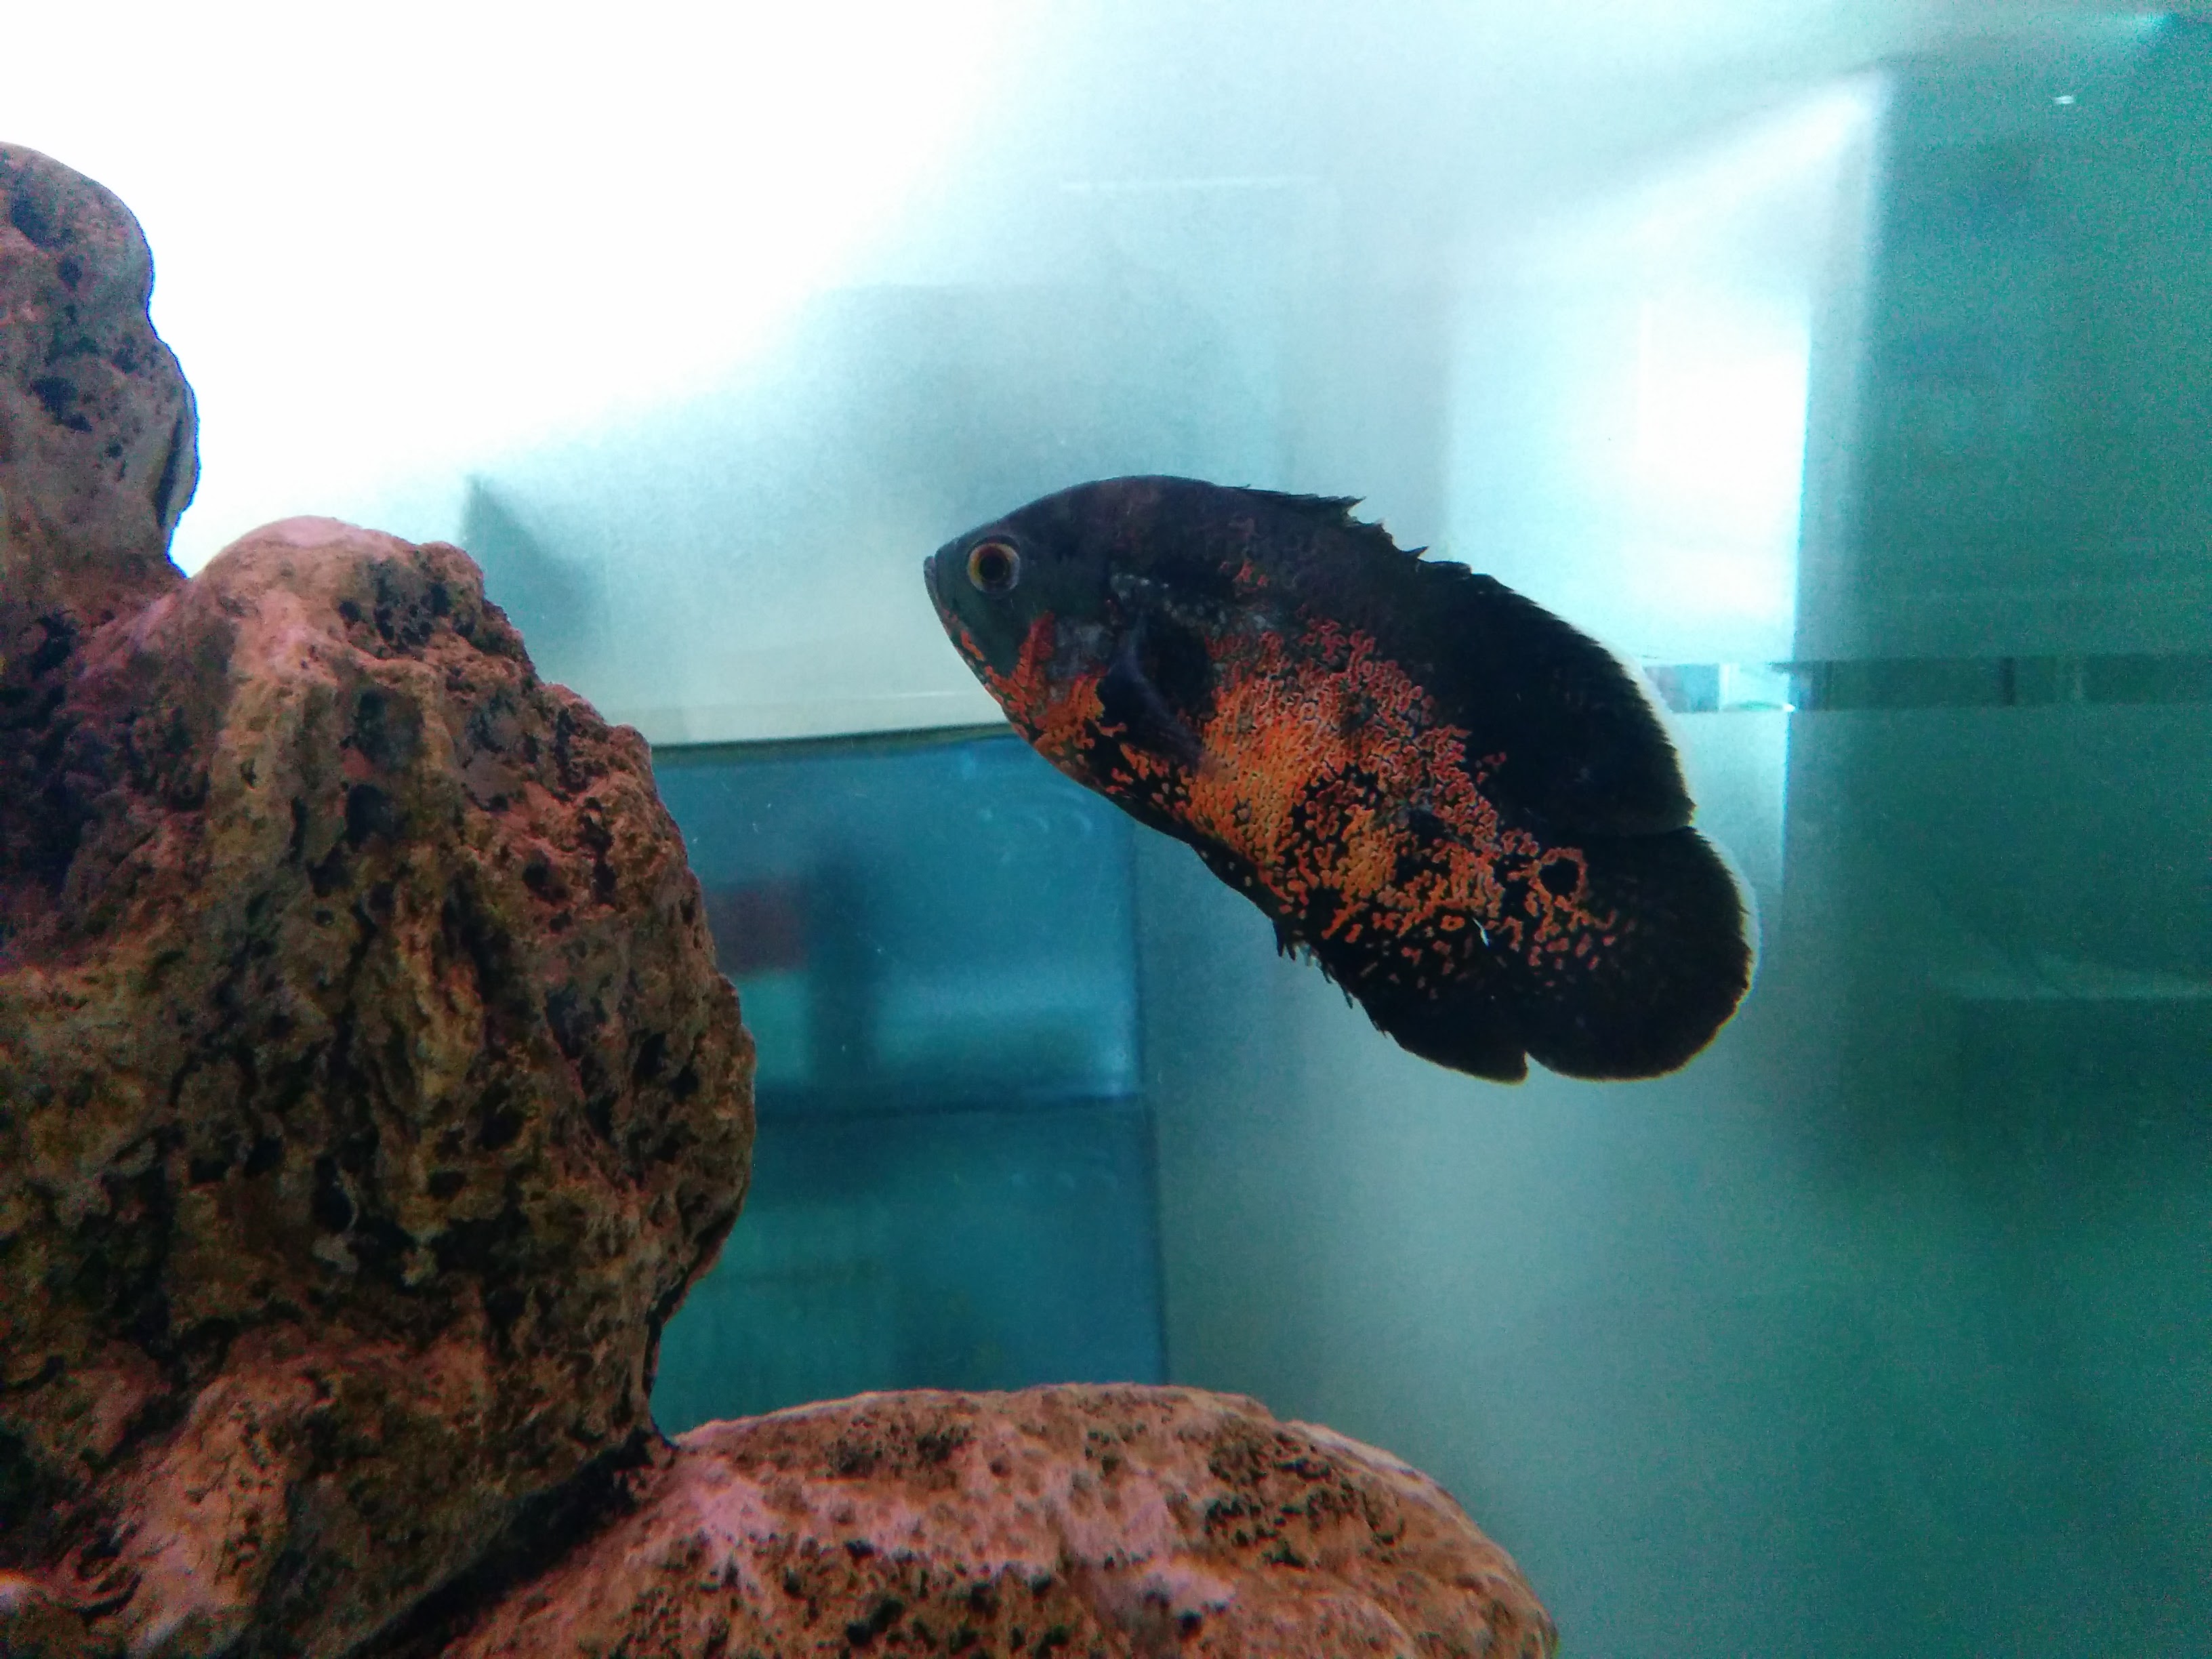 IMG_20151207_141506.jpg 수족관의 검붉은 색 관상용 물고기.. 타이거 오스카(Tiger Oscar), Astronotus ocellatus